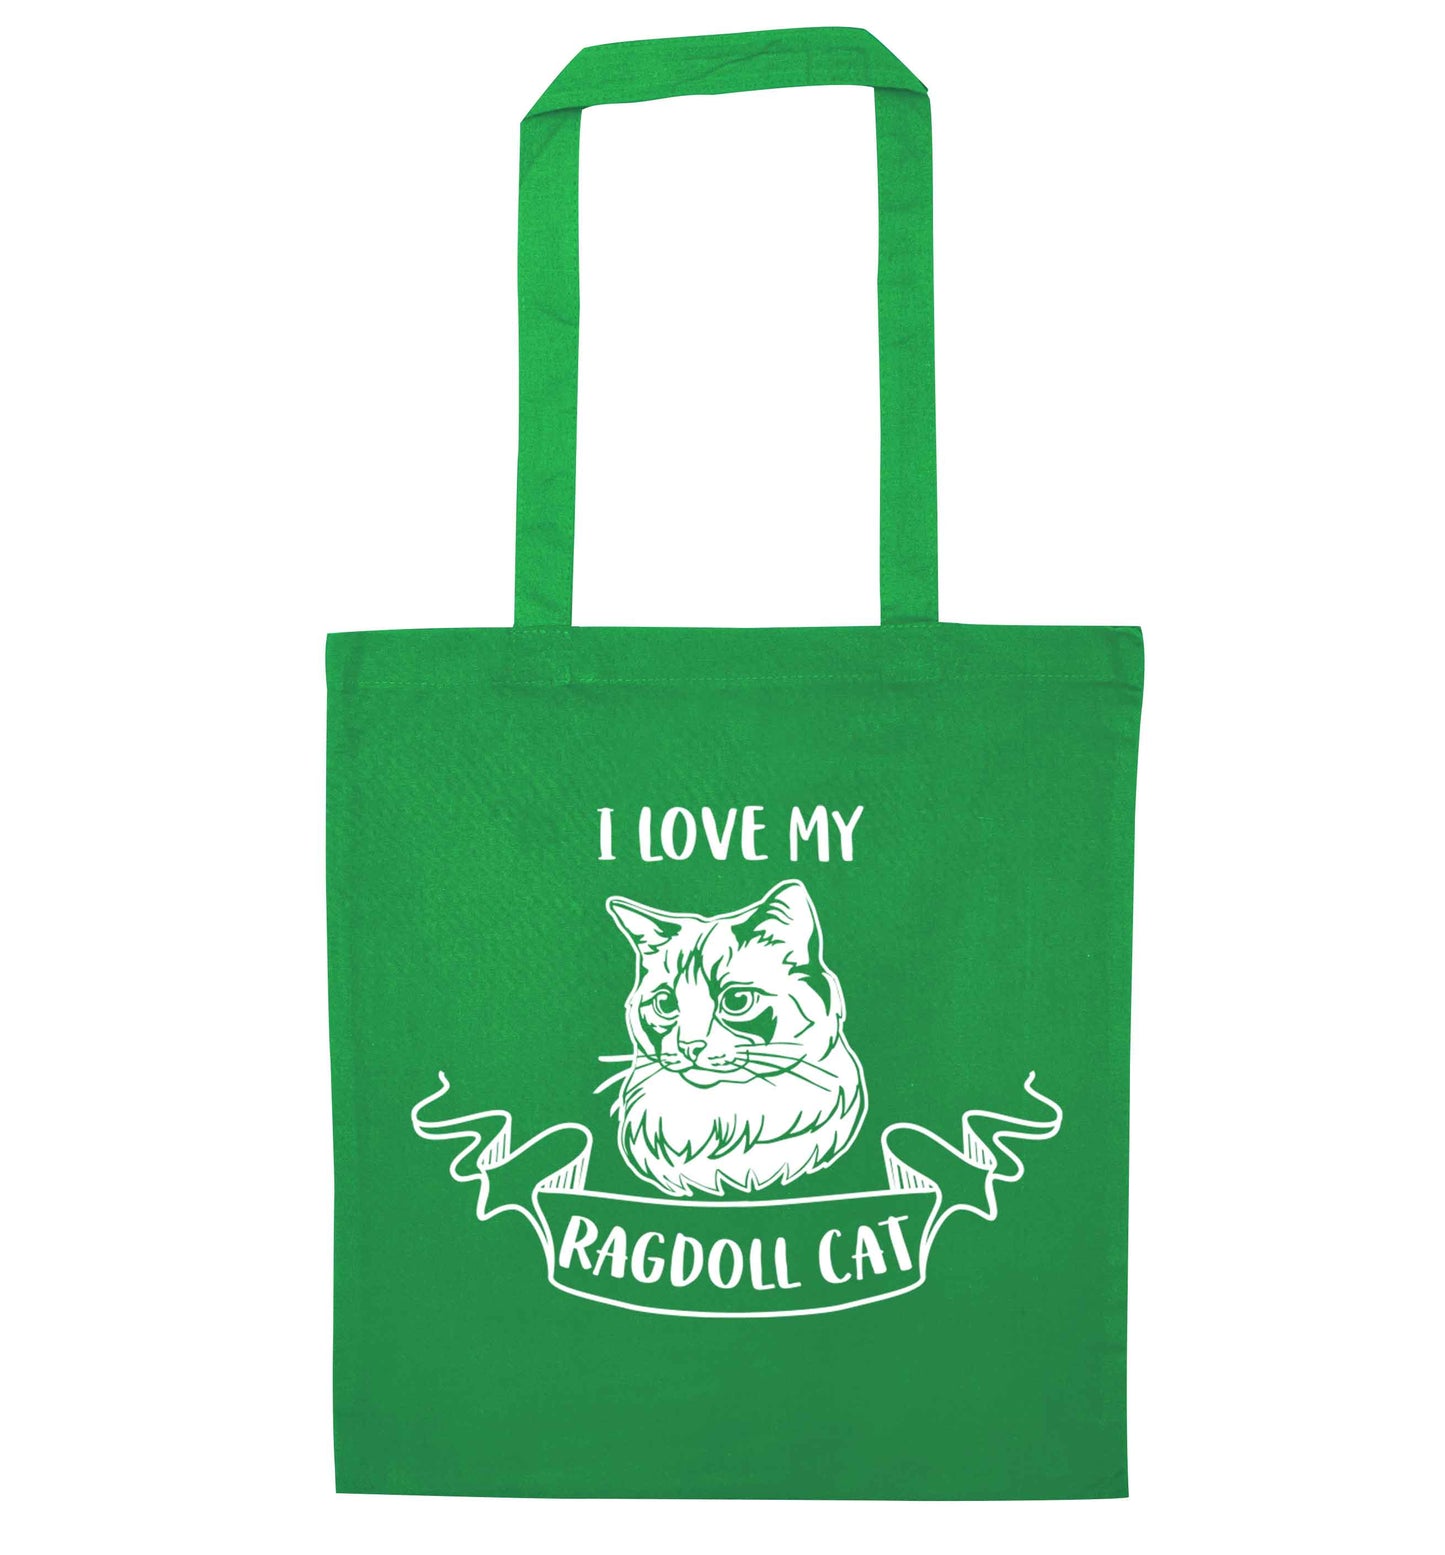 I love my ragdoll cat green tote bag